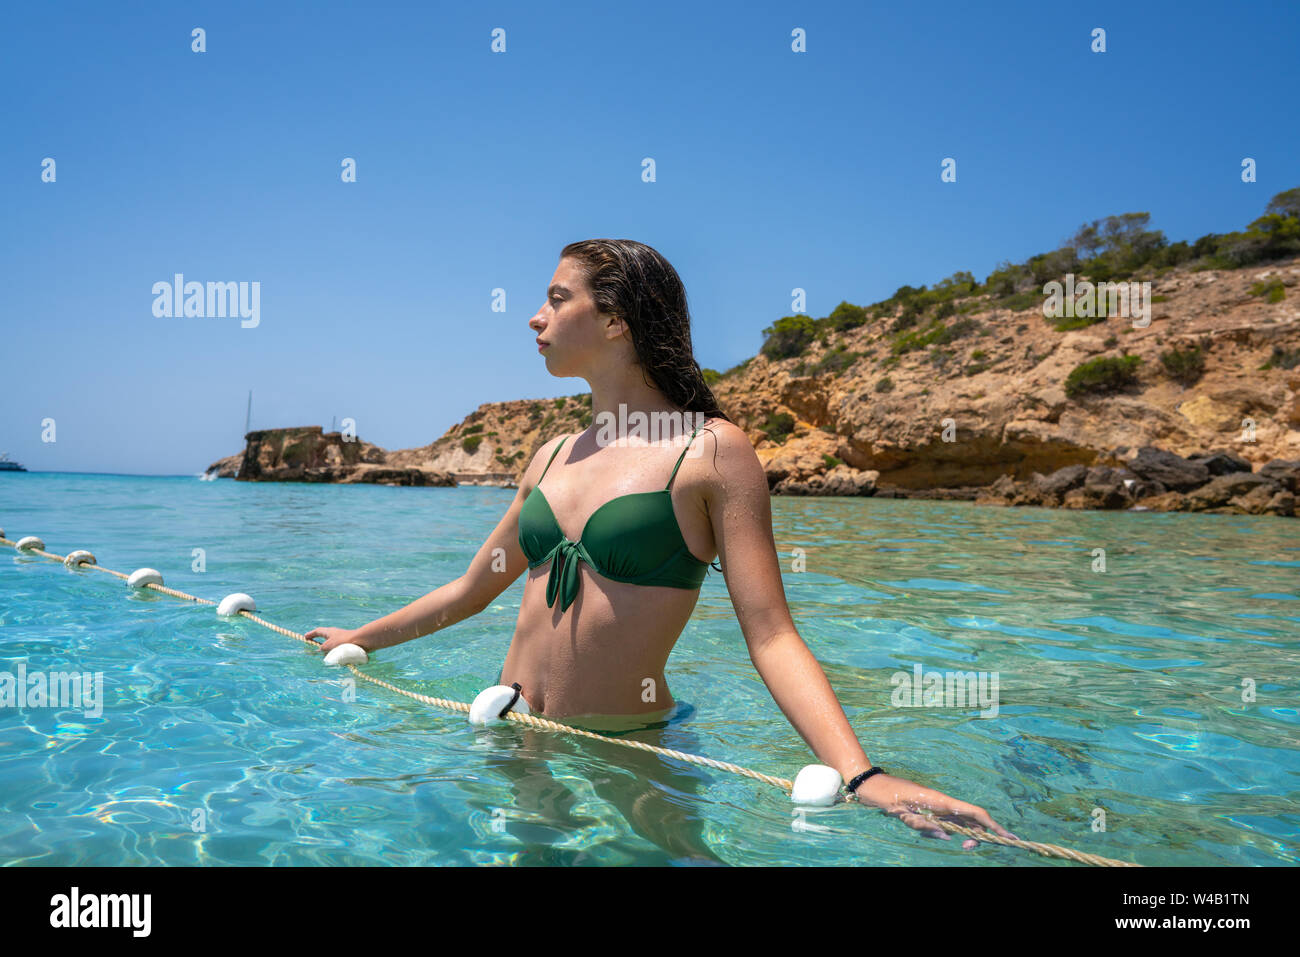 Ibiza bikini girl relaxed in clear water beach of Balearic Islands Stock Photo